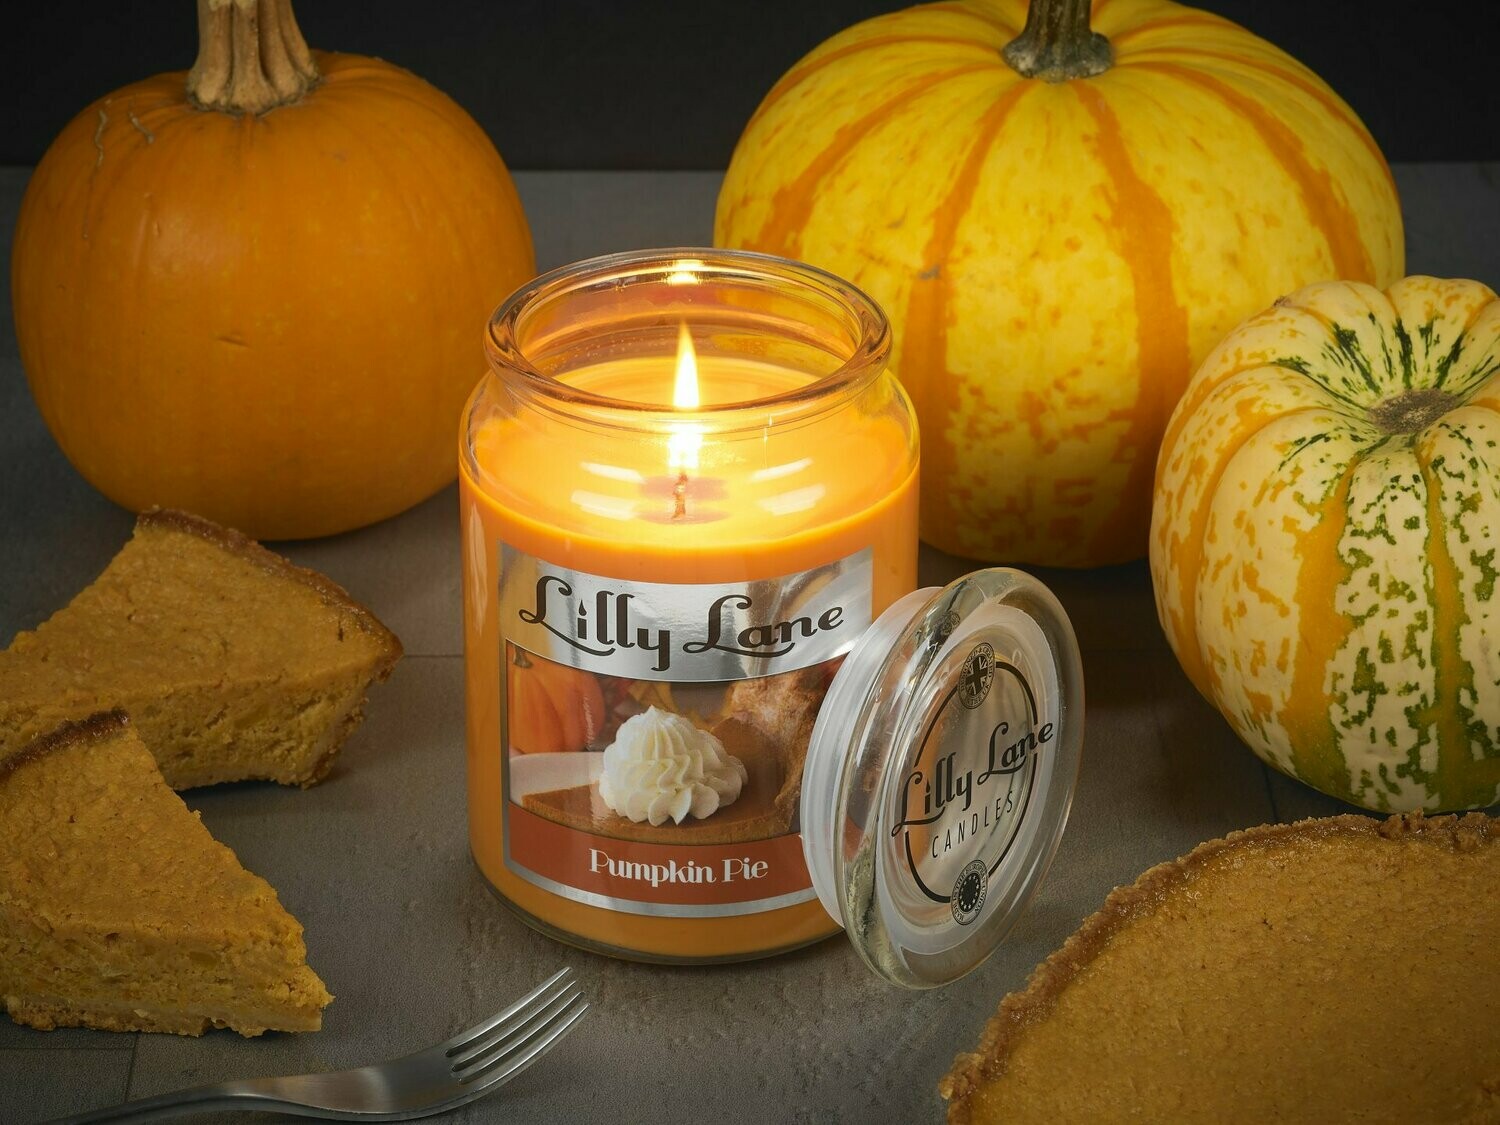 Lilly Lane Pumpkin Pie 18oz Jar Candle